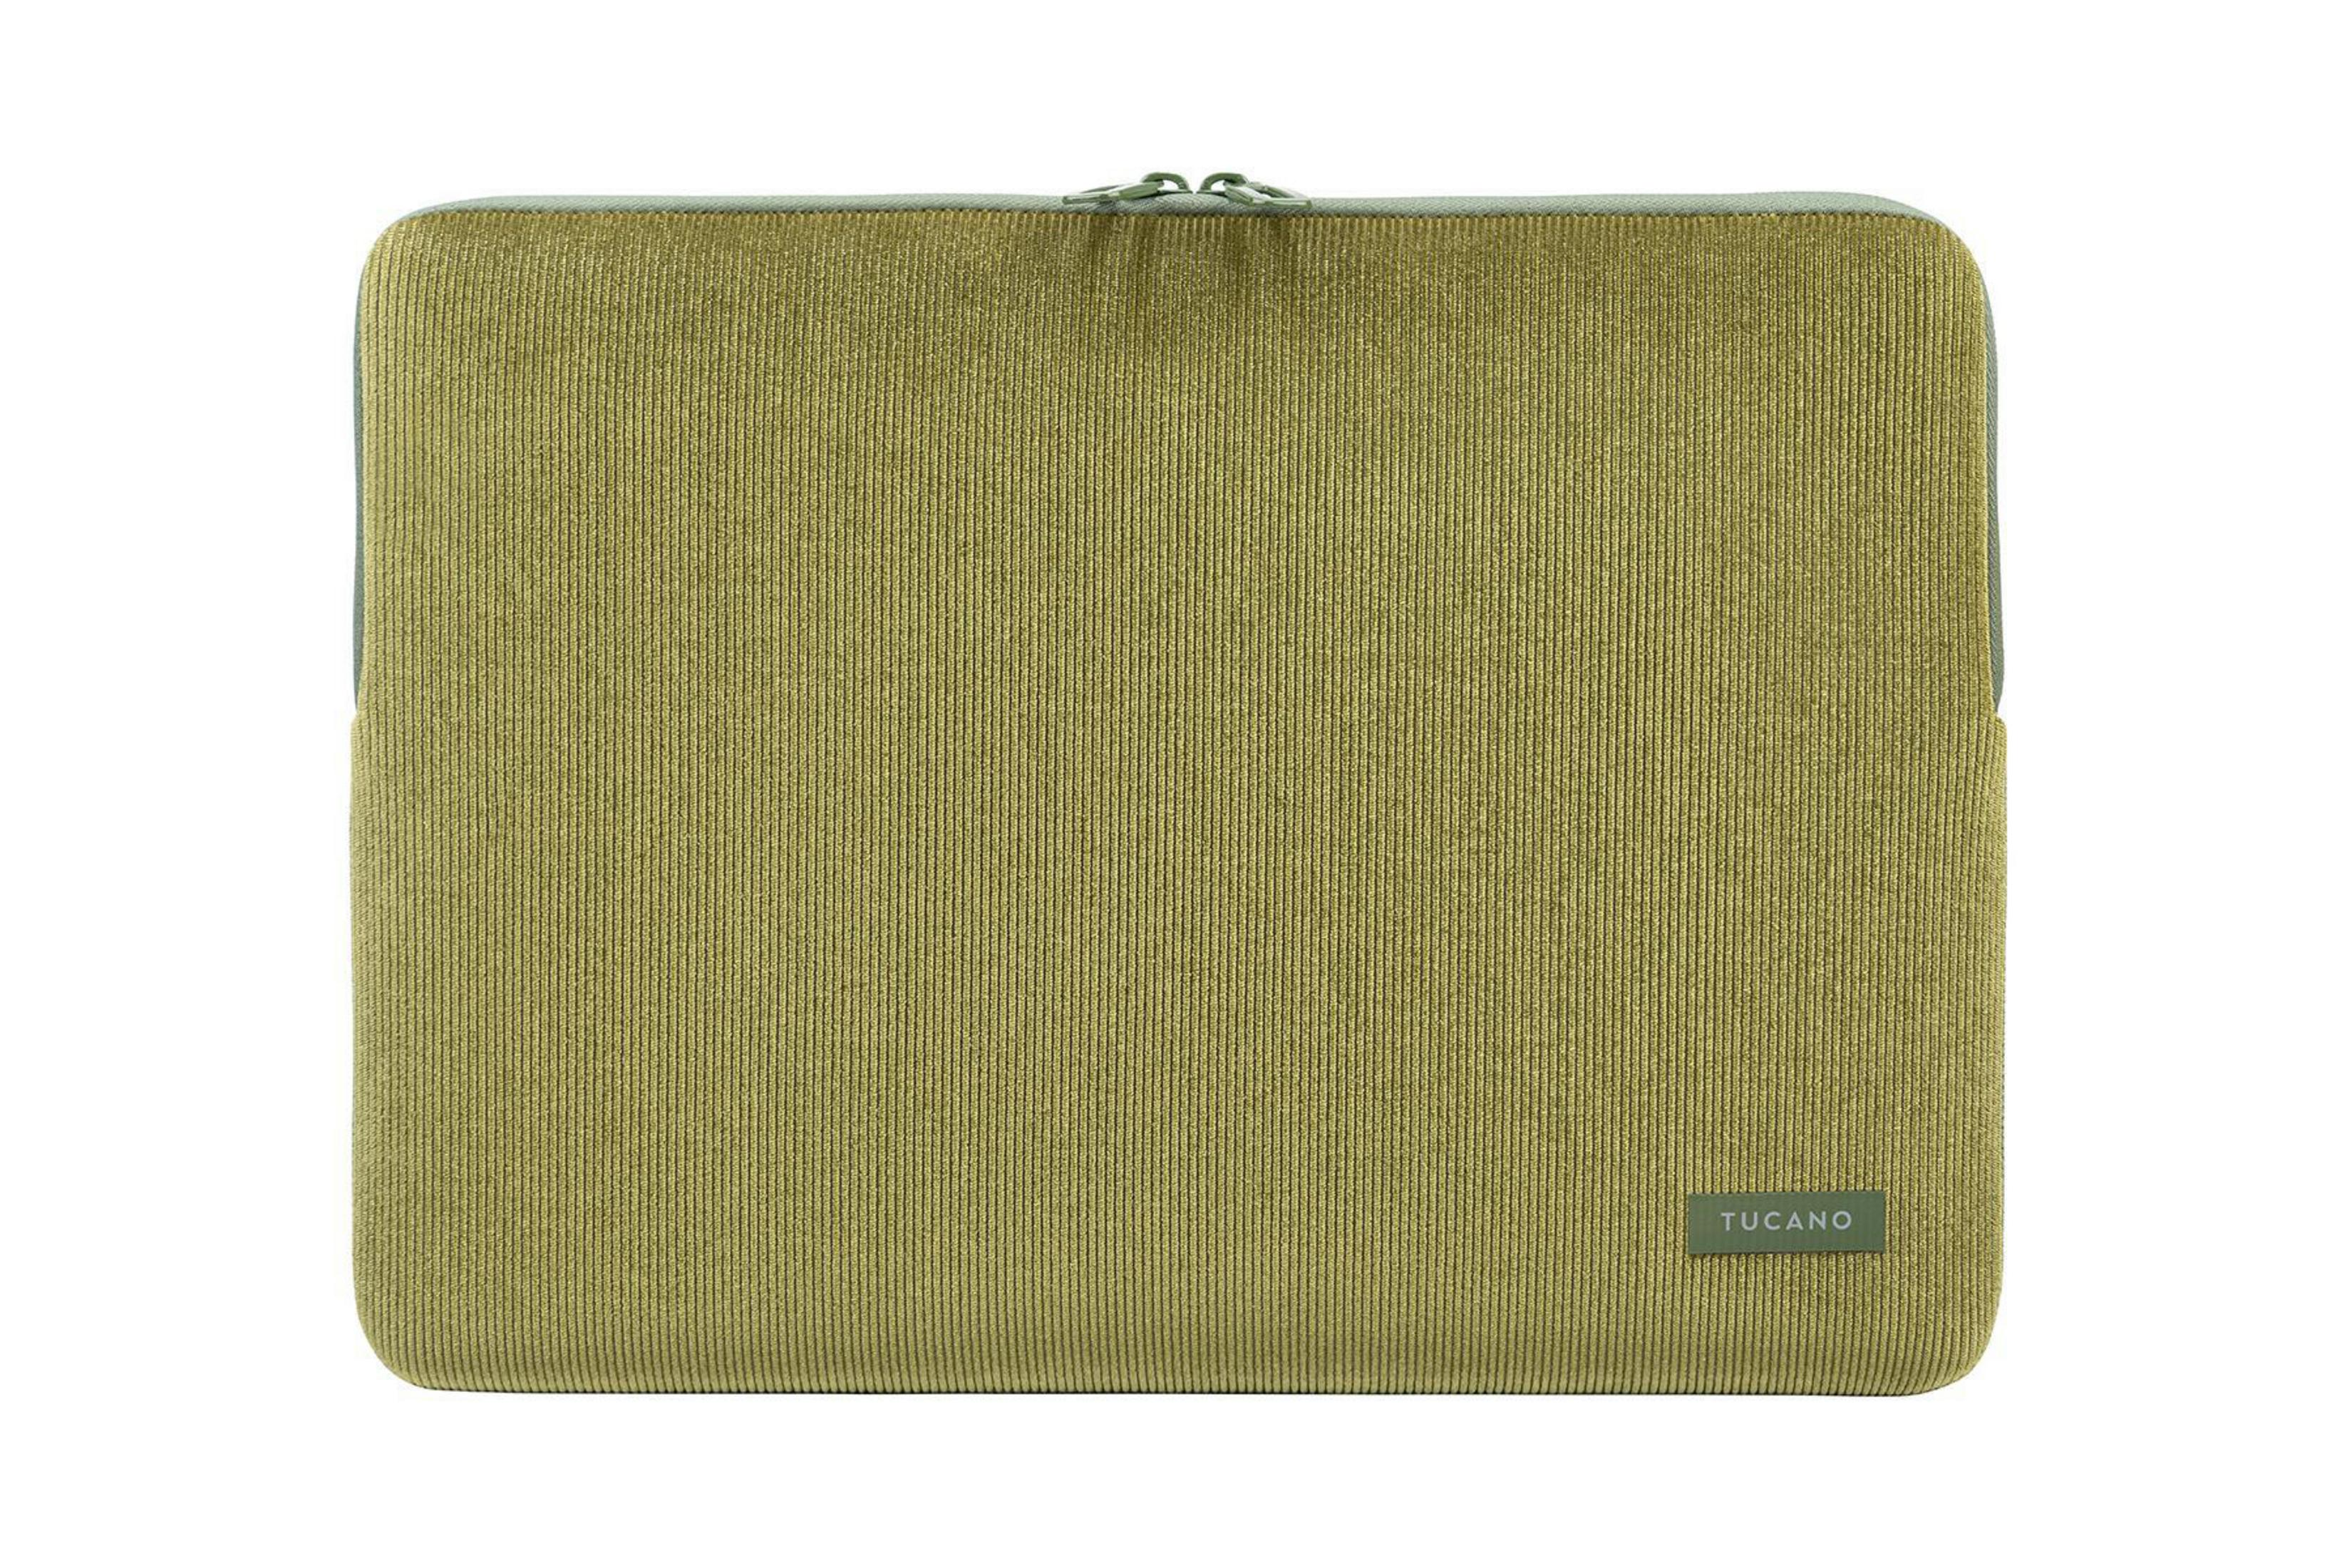 TUCANO BFVELMB16-V SLEEVE Grün Neopren, Cord, für Apple Notebooktasche GRUEN Sleeve 15,6